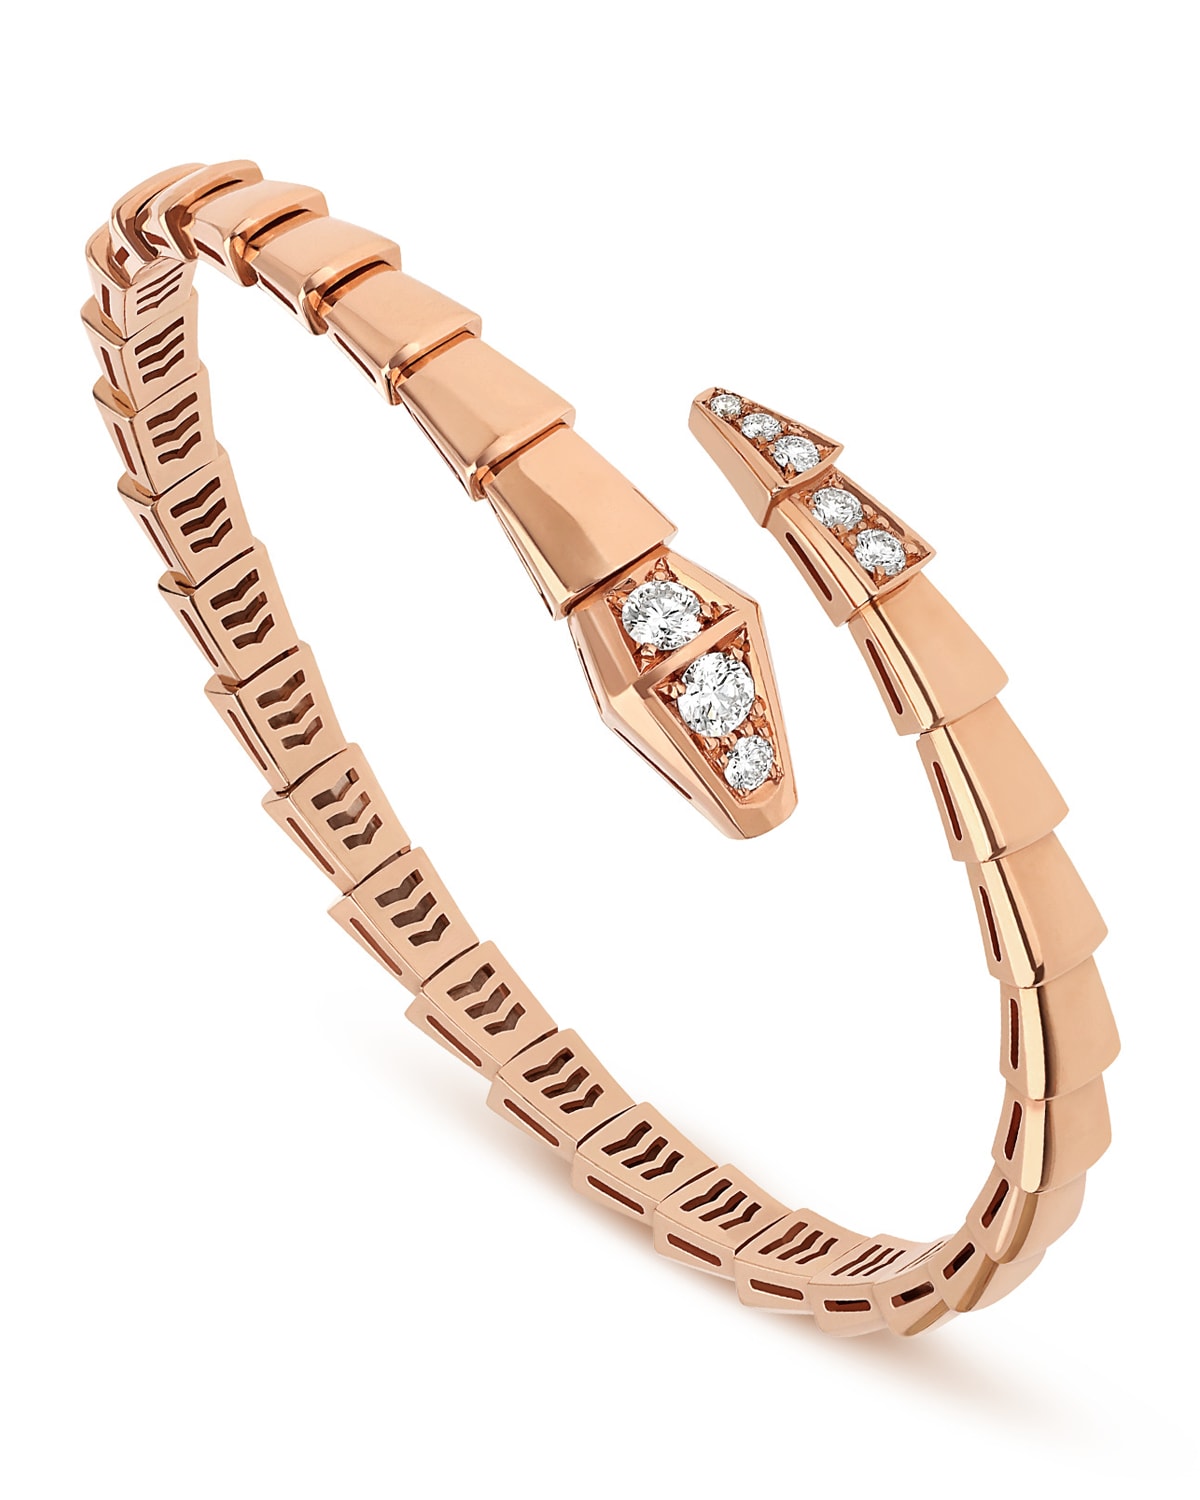 Serpenti Viper Bracelet in 18k Rose Gold and Diamonds, Size S